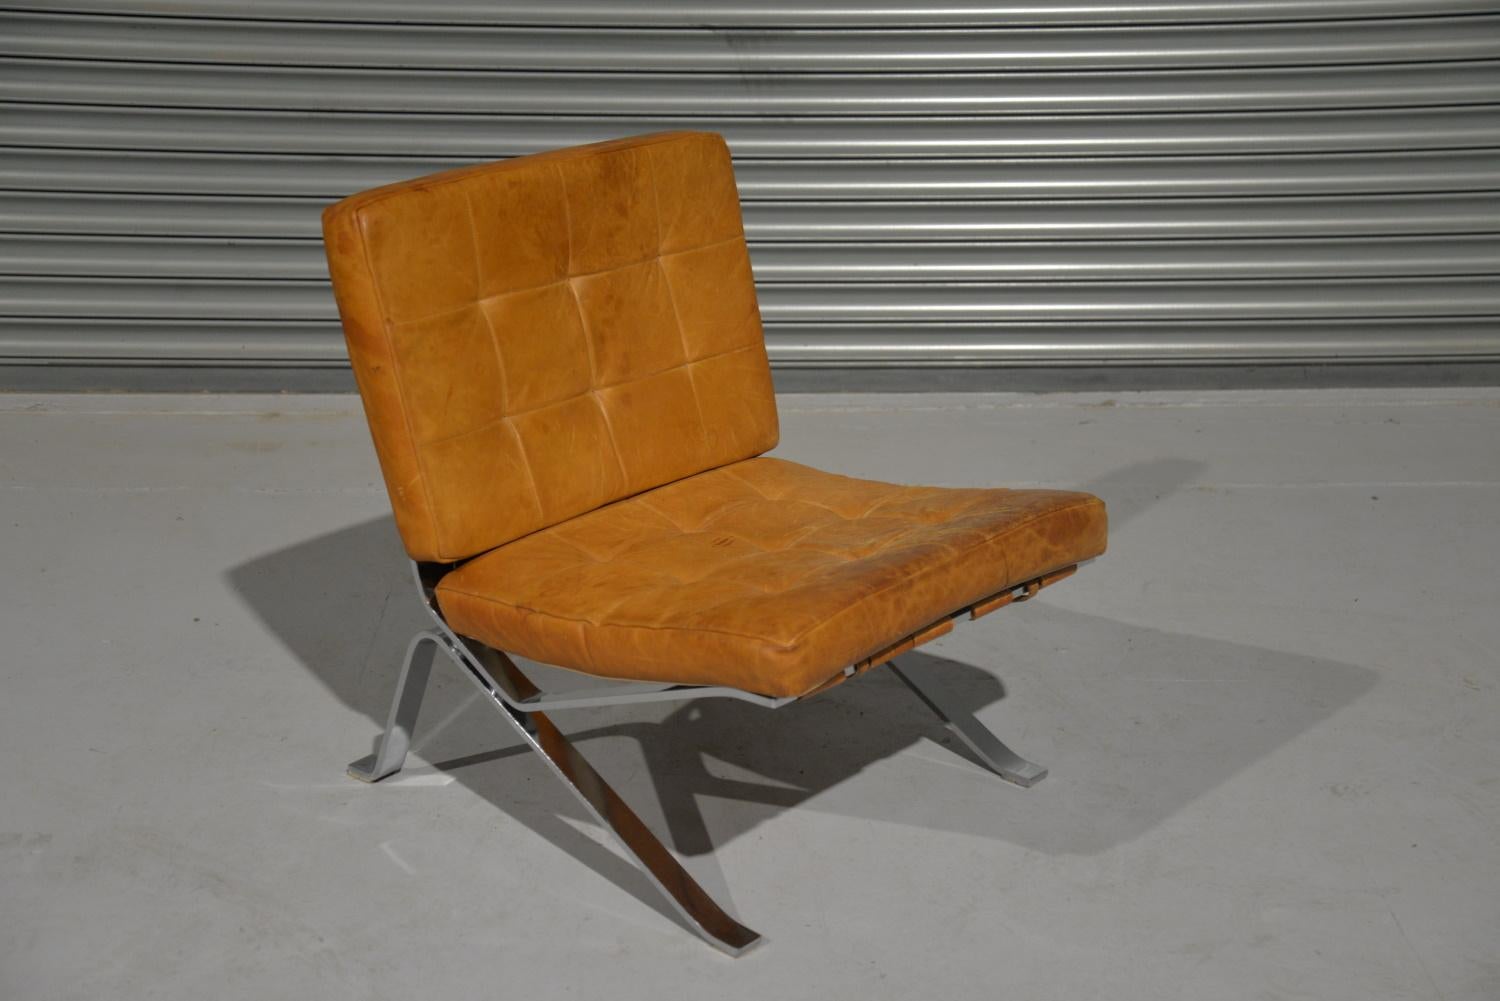 Vintage Rh-301 Lounge Chair by Robert Haussmann for De Sede, Switzerland, 1954 For Sale 3